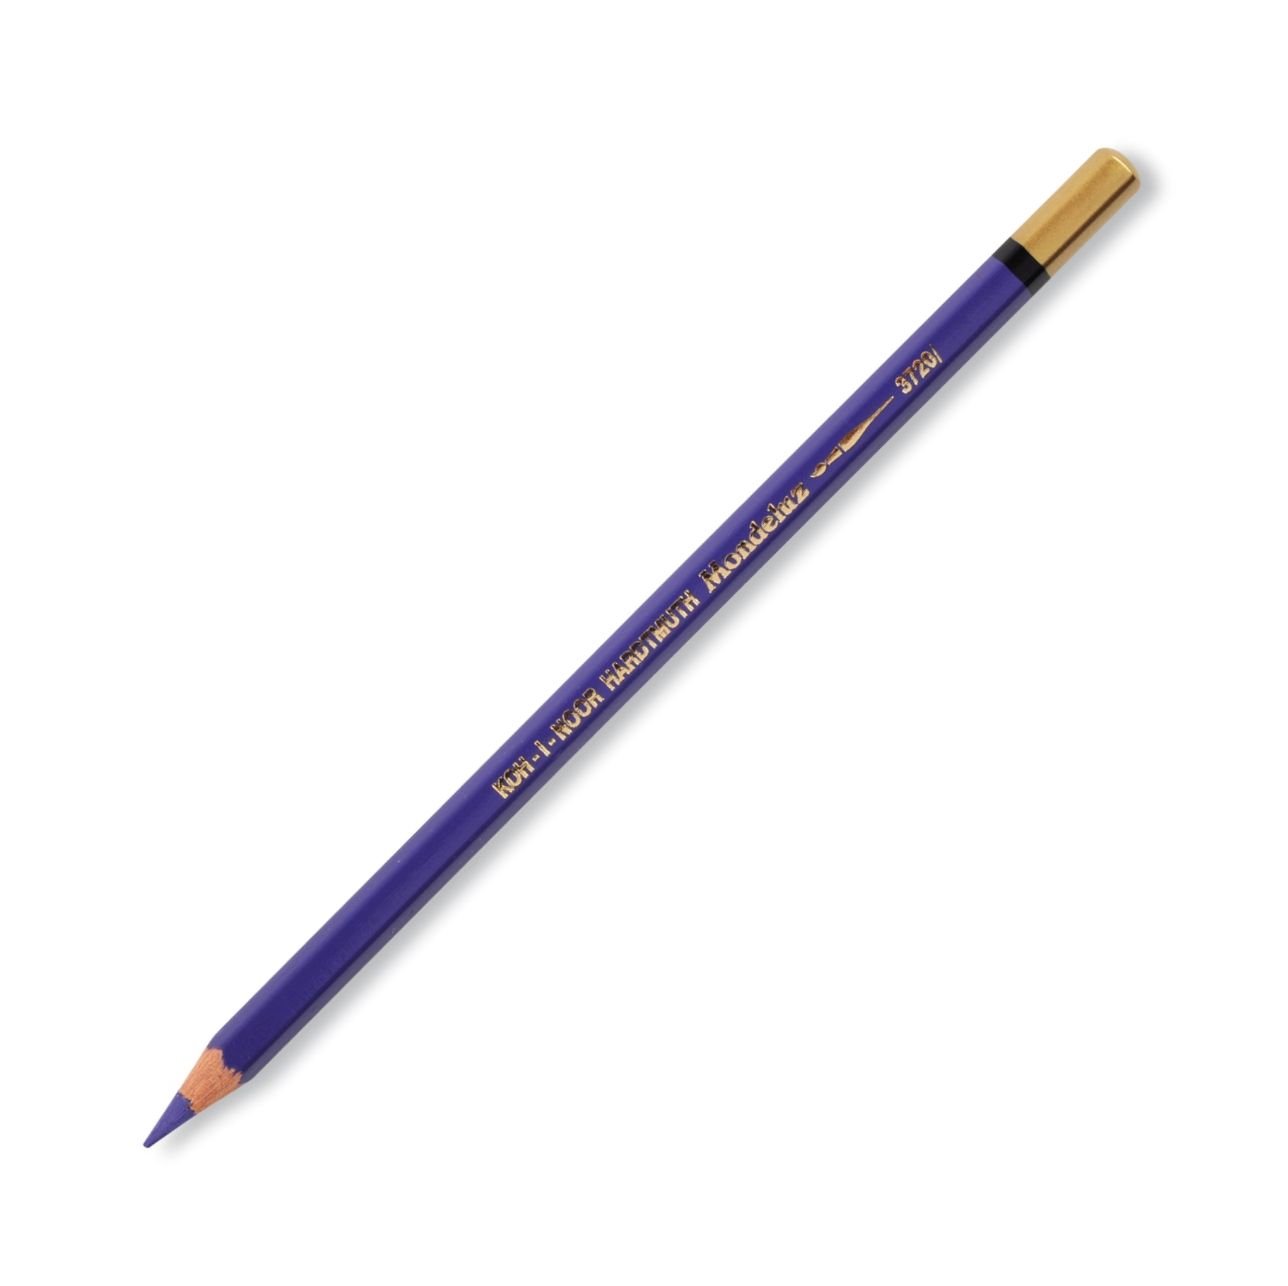 Koh-I-Noor Mondeluz Aquarell Artist's Water Soluble Coloured Pencil - Blue Violet (14)